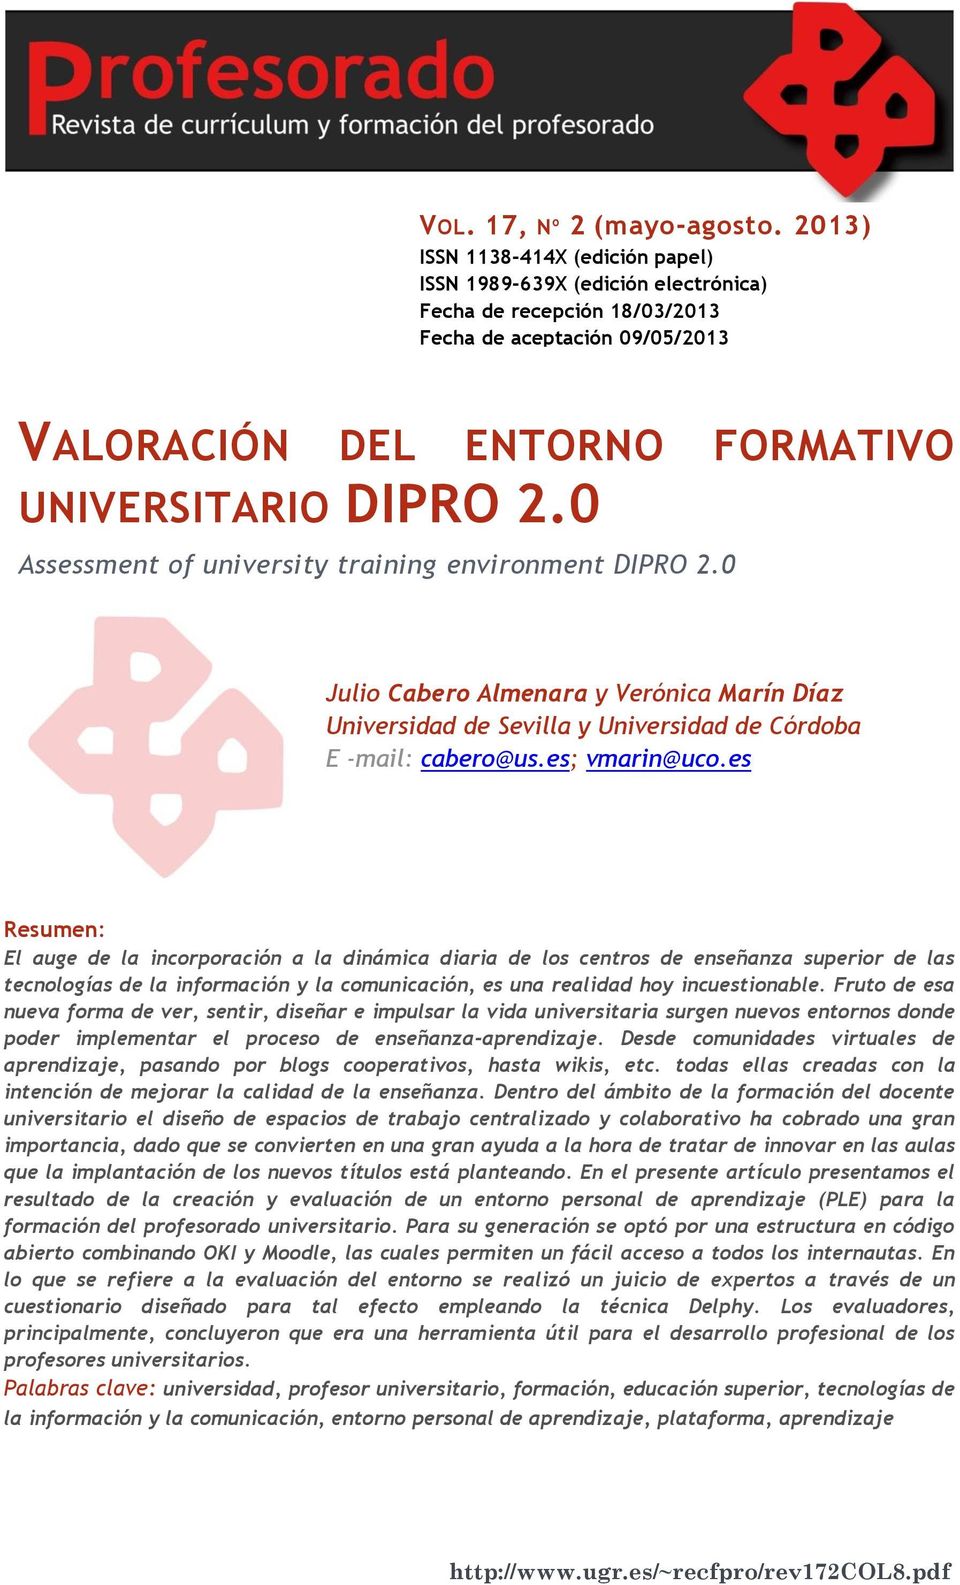 0 Assessment of university training environment DIPRO 2.0 Julio Cabero Almenara y Verónica Marín Díaz Universidad de Sevilla y Universidad de Córdoba E -mail: cabero@us.es; vmarin@uco.